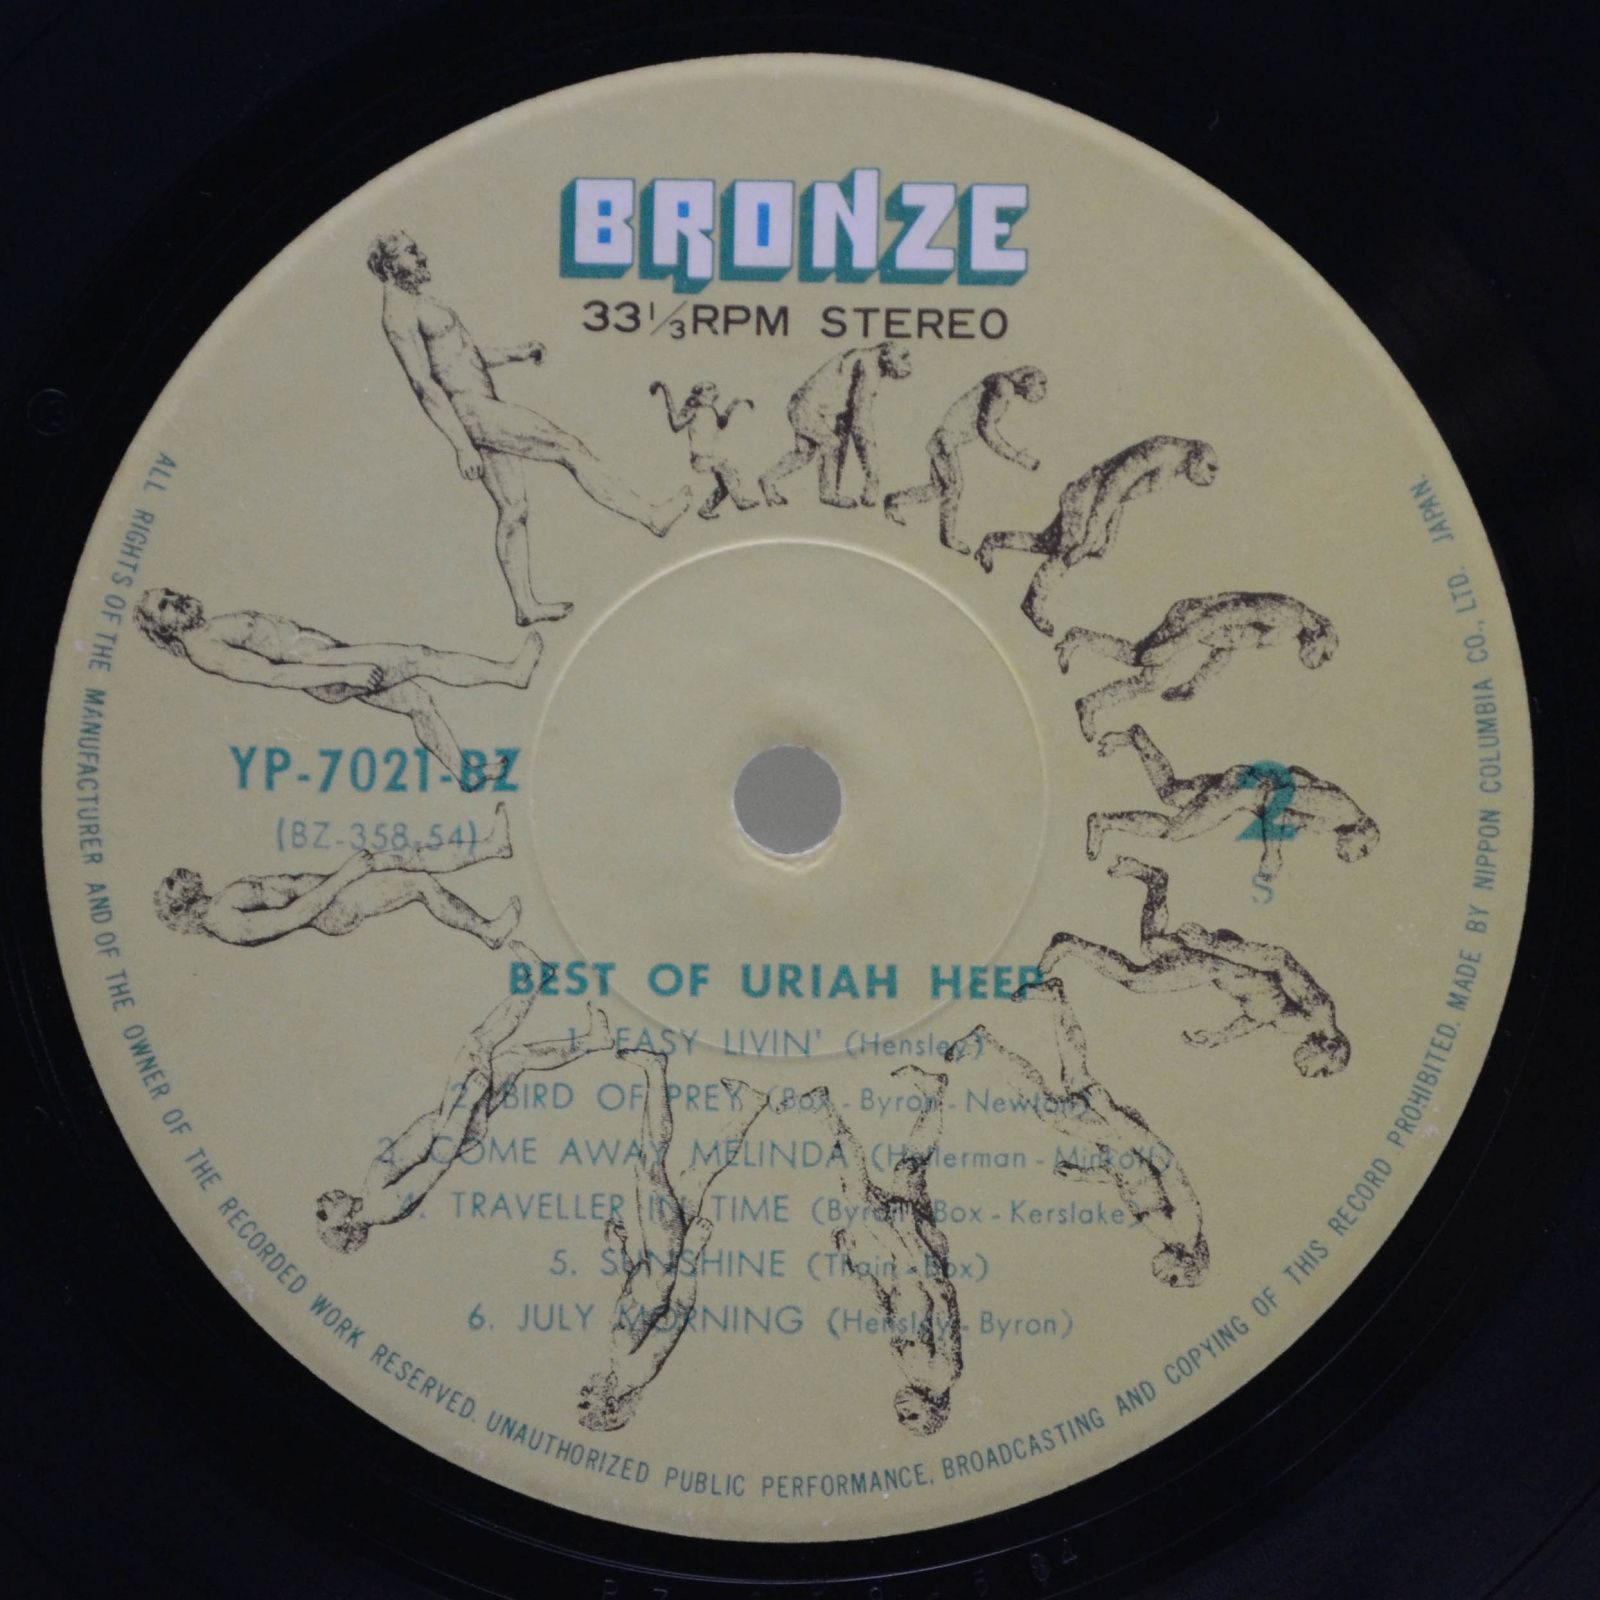 Uriah Heep — Best Of Uriah Heep, 1974